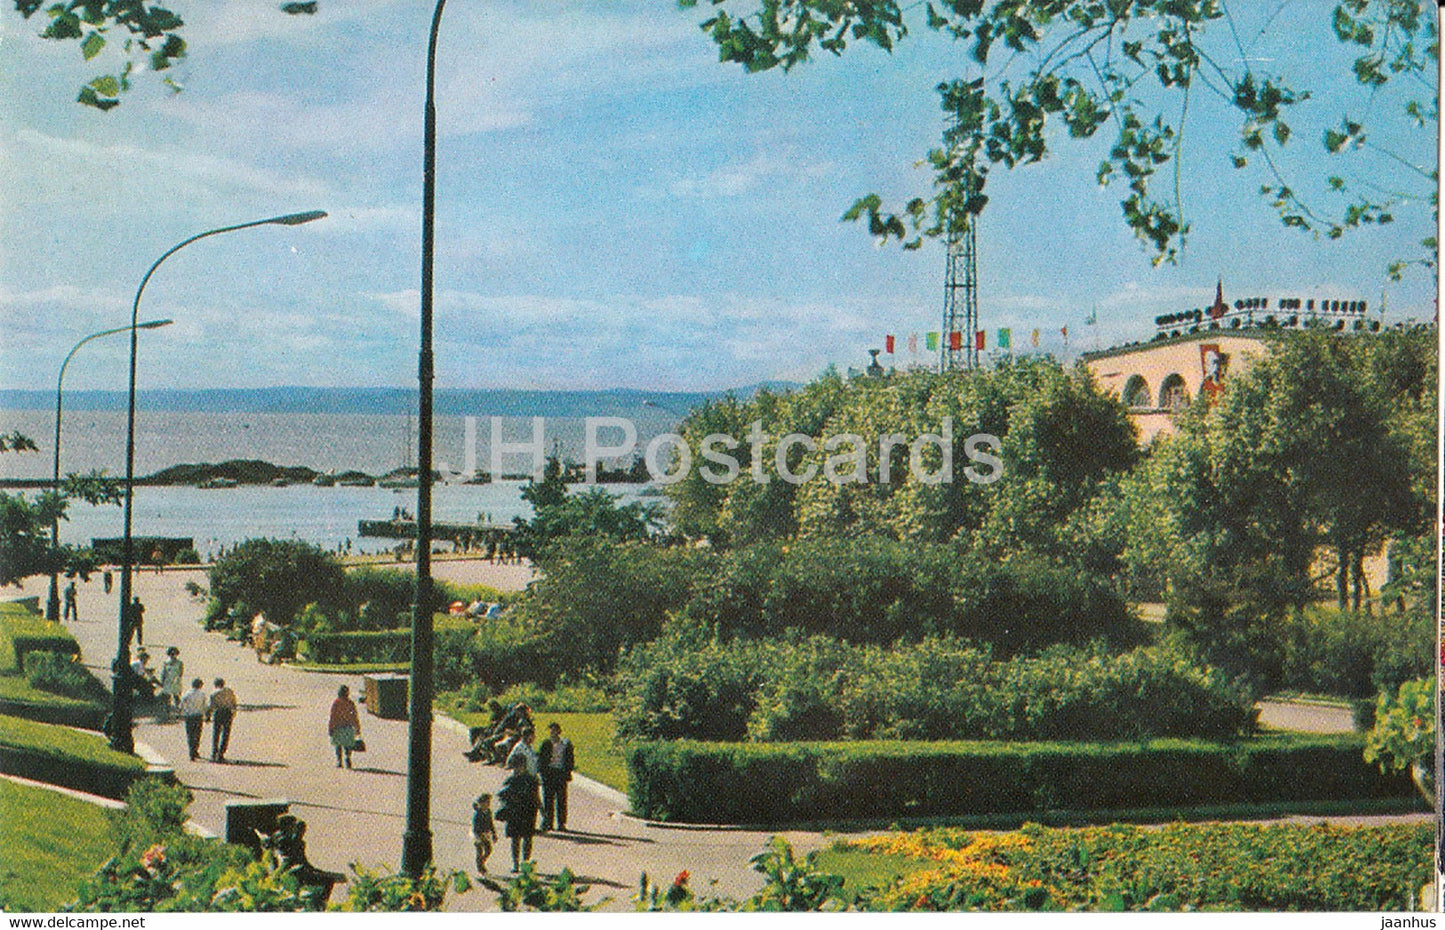 Vladivostok - Square at the Sports Harbor - 1973 - Russia USSR - unused - JH Postcards